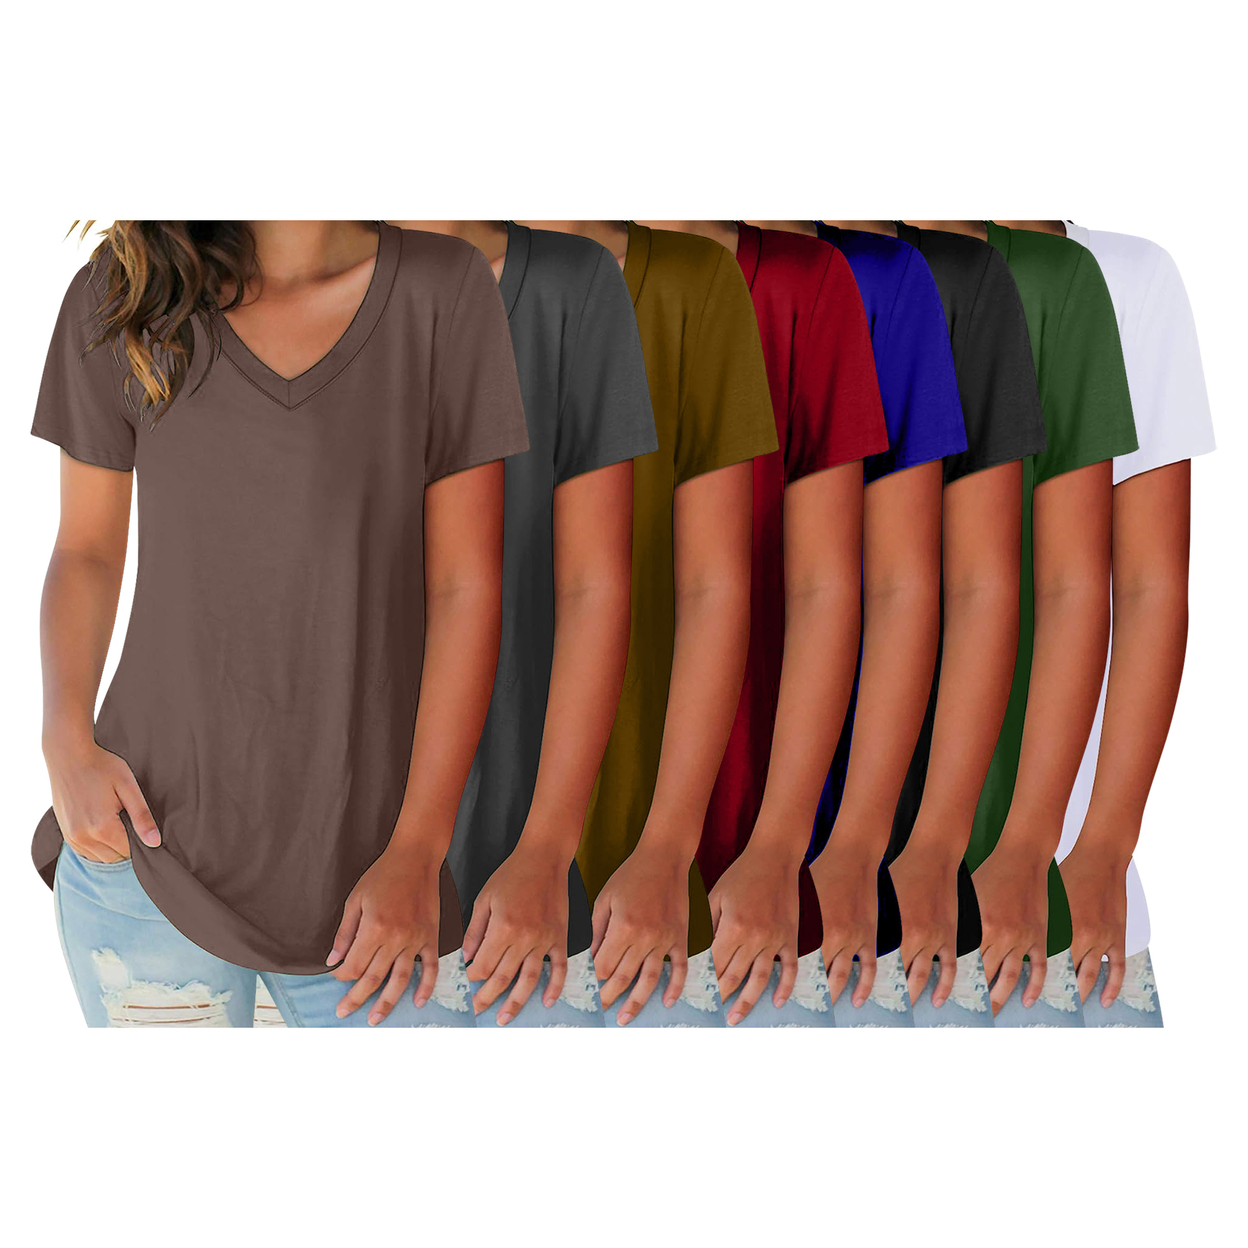 2-Pack: Women's Ultra Soft Smooth Cotton Blend Basic V-Neck Short Sleeve Shirts - Grey & Mustard, X-large